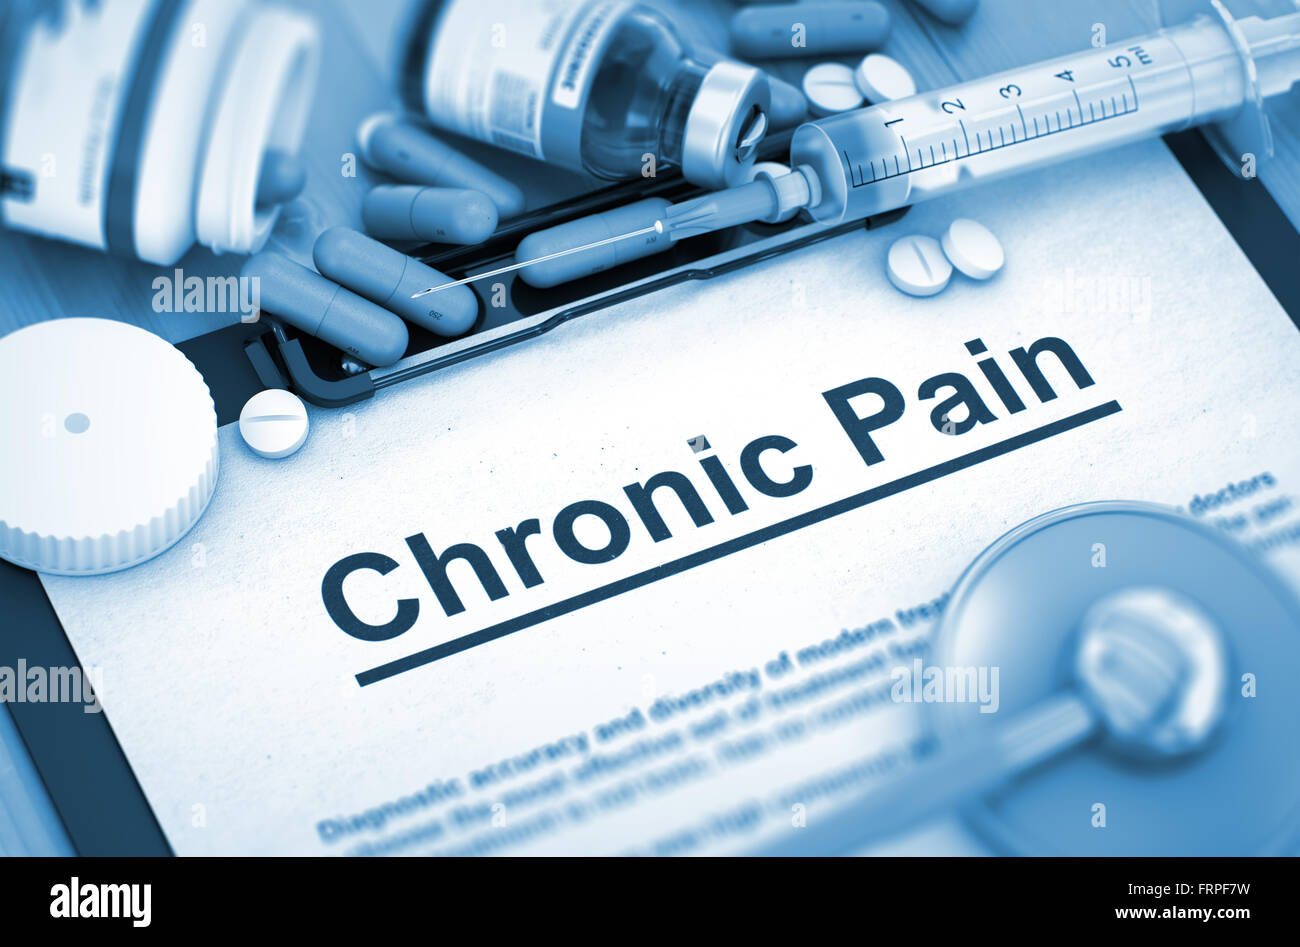 Chronic Pain Diagnosis. Medical Concept. Stock Photo